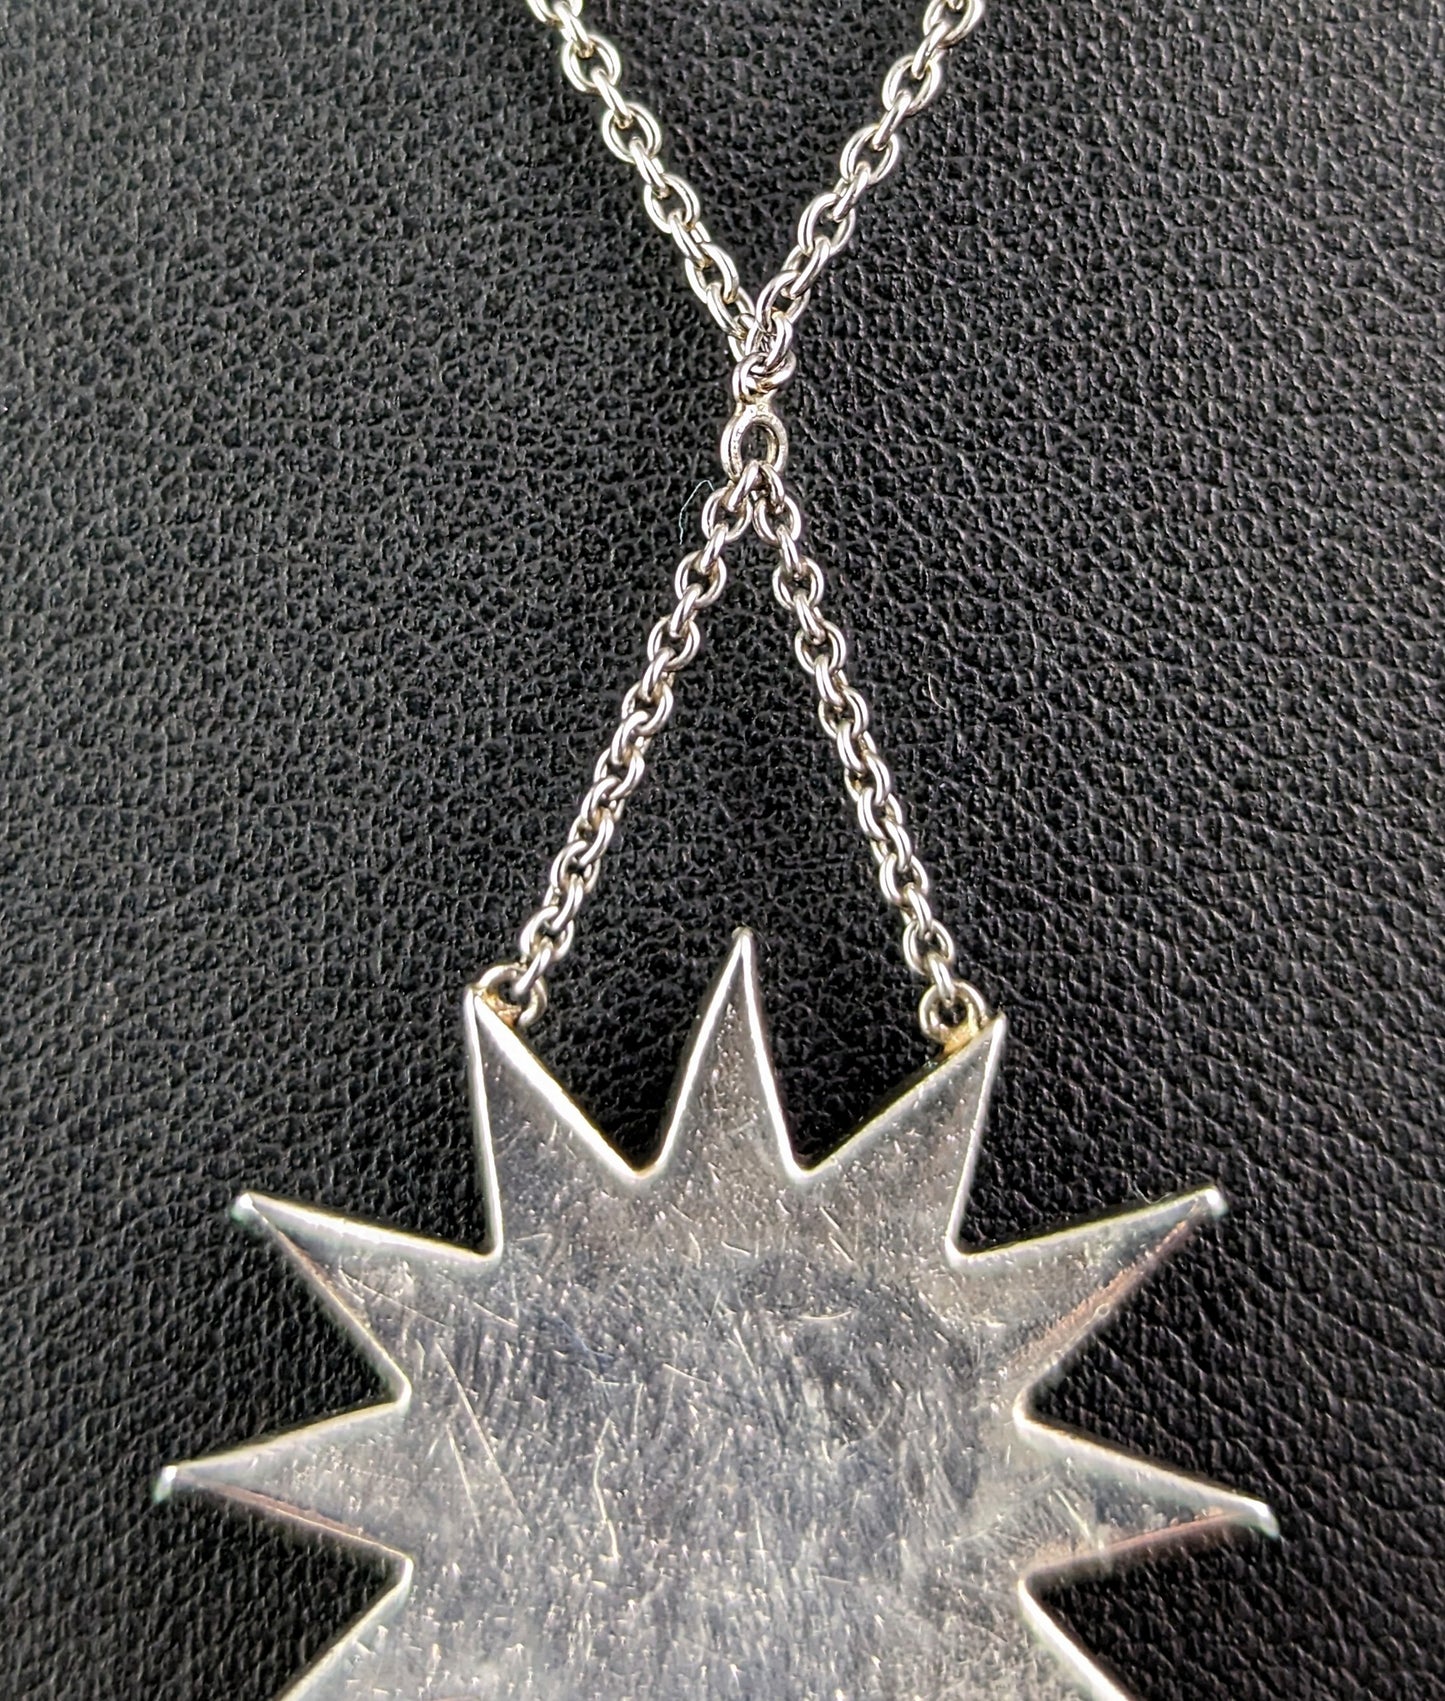 Antique Diamond Star pendant, sterling silver necklace, Victorian